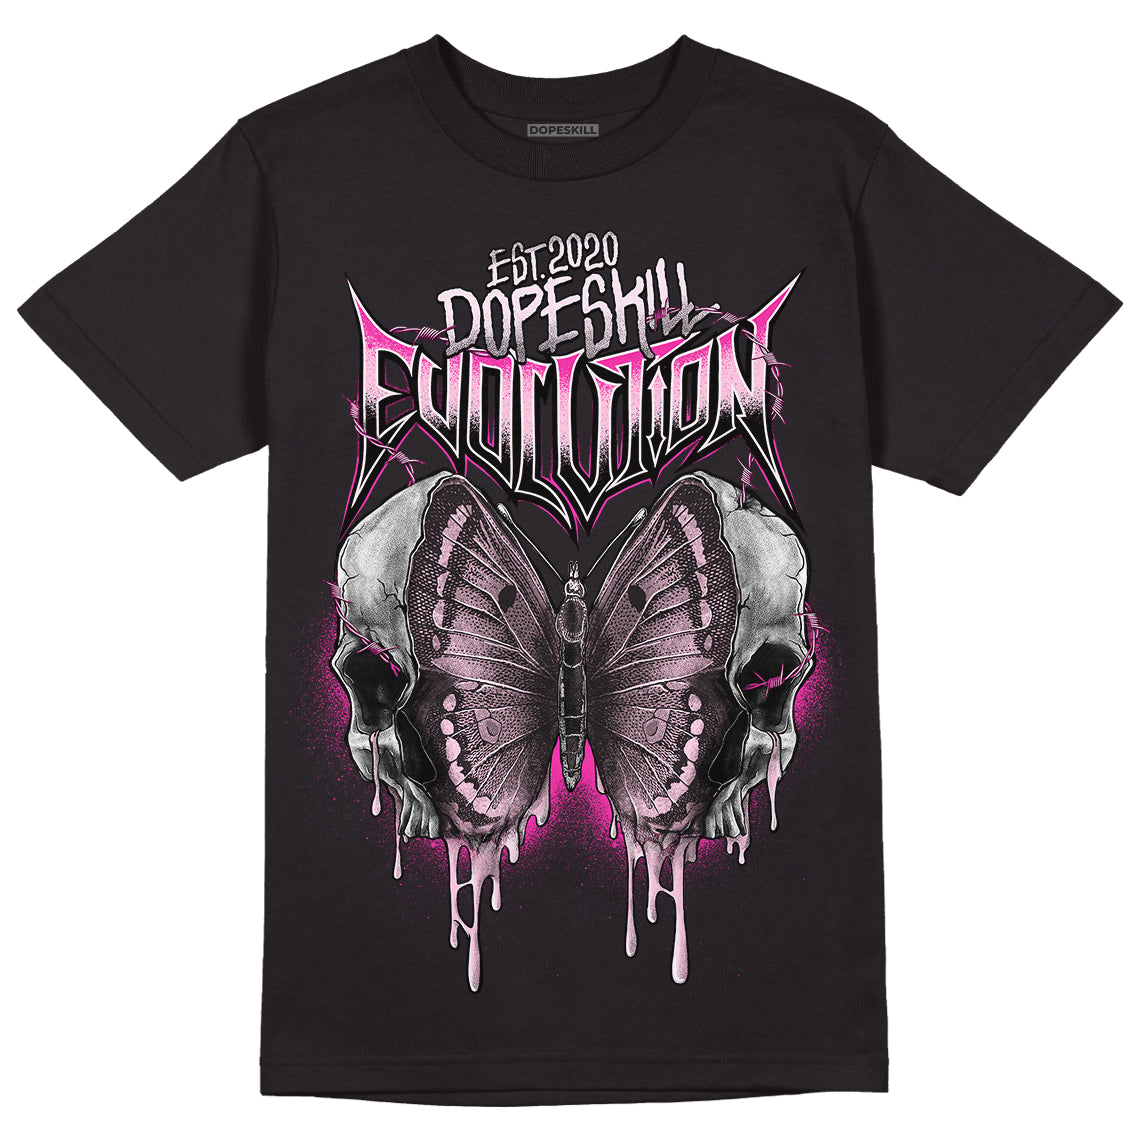 Triple Pink Dunk Low DopeSkill T-Shirt DopeSkill Evolution Graphic - Black